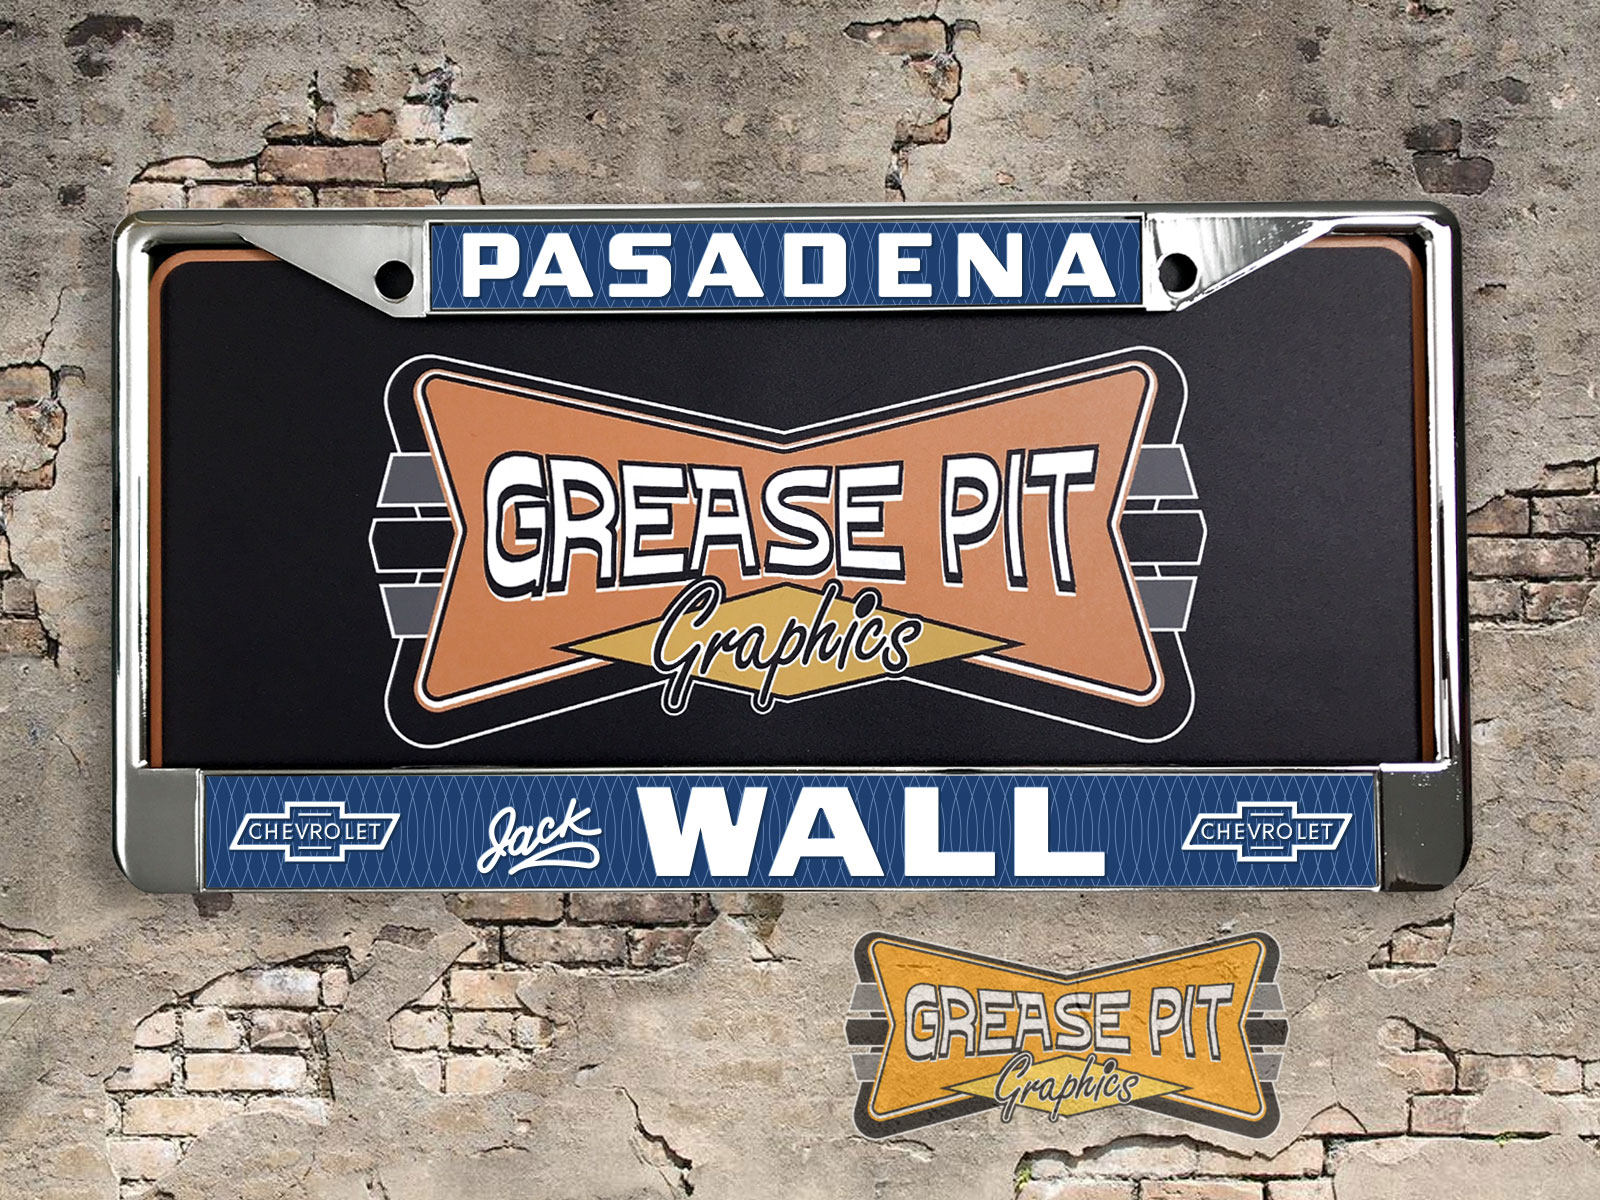 Jack Wall Chevrolet Pasadena License Plate Frame Tribute